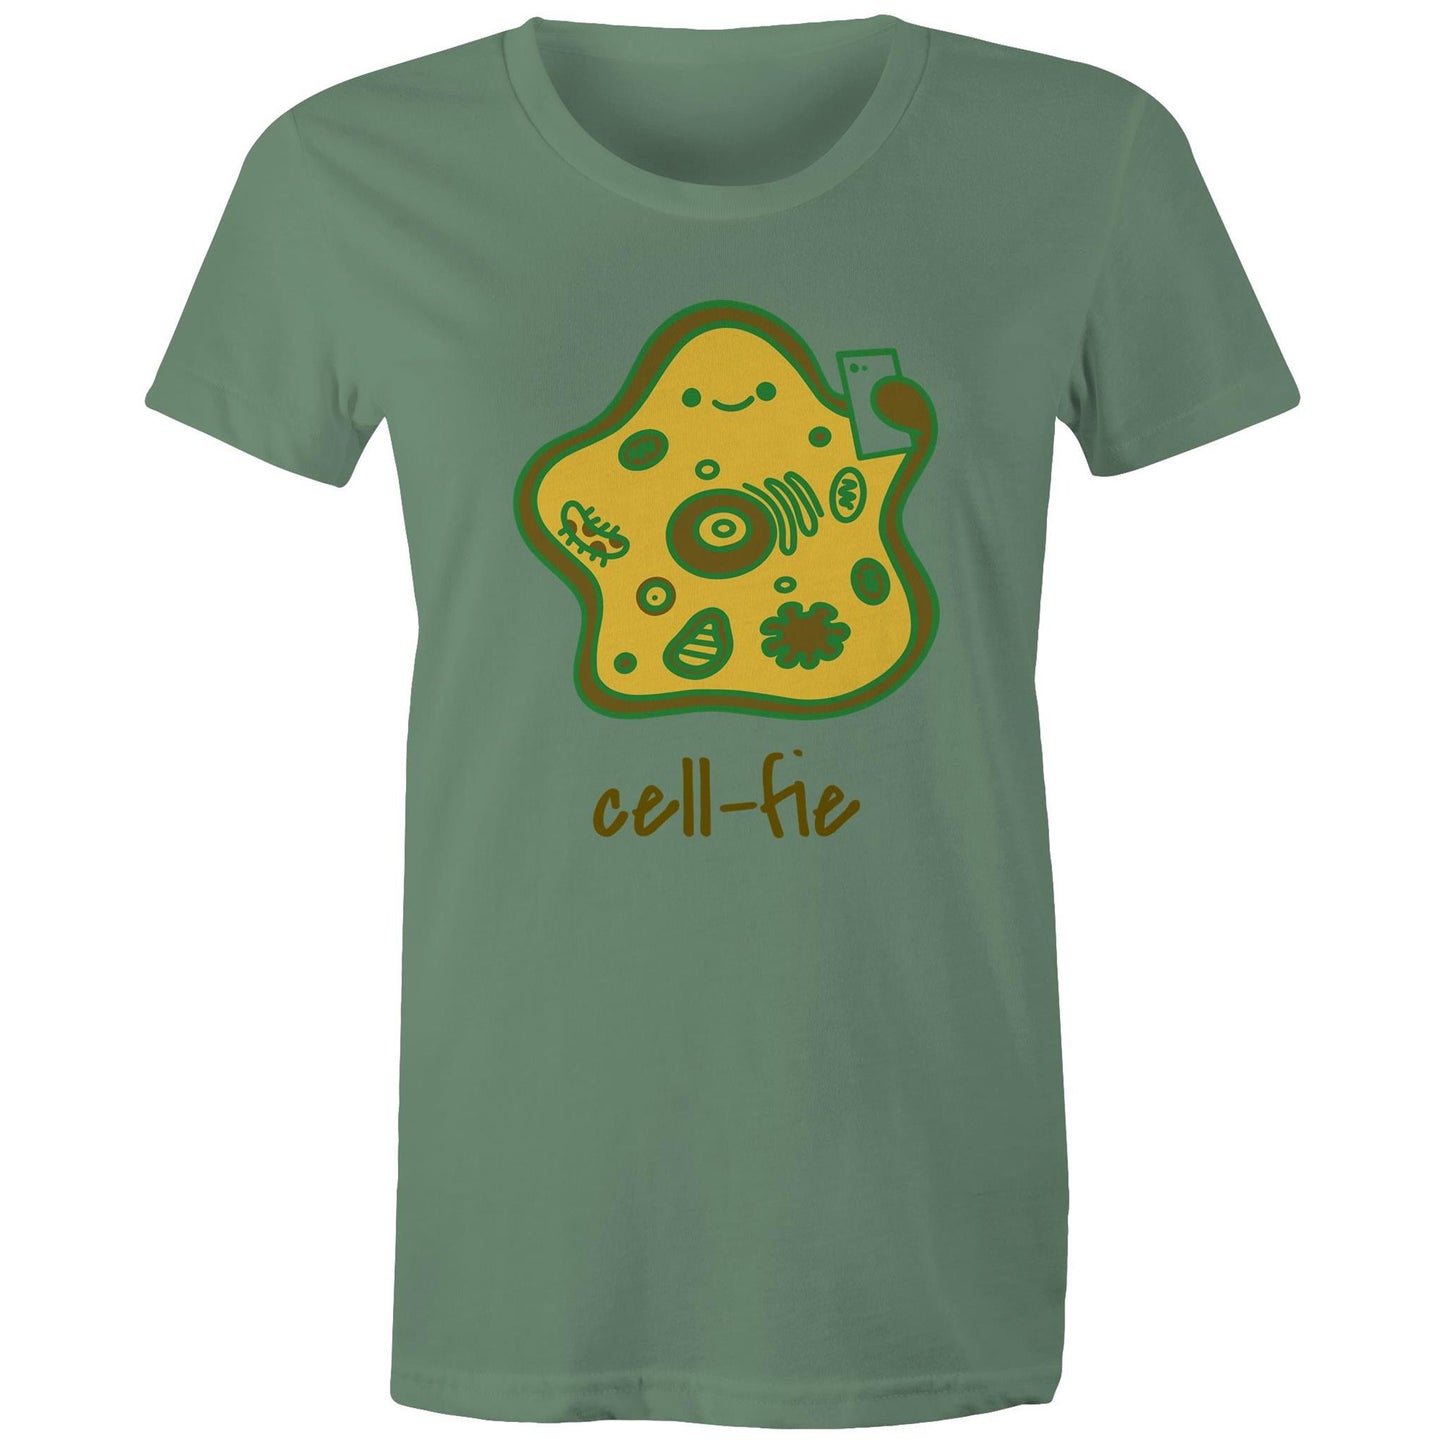 Cell-fie - Womens T-shirt Sage Womens T-shirt Science